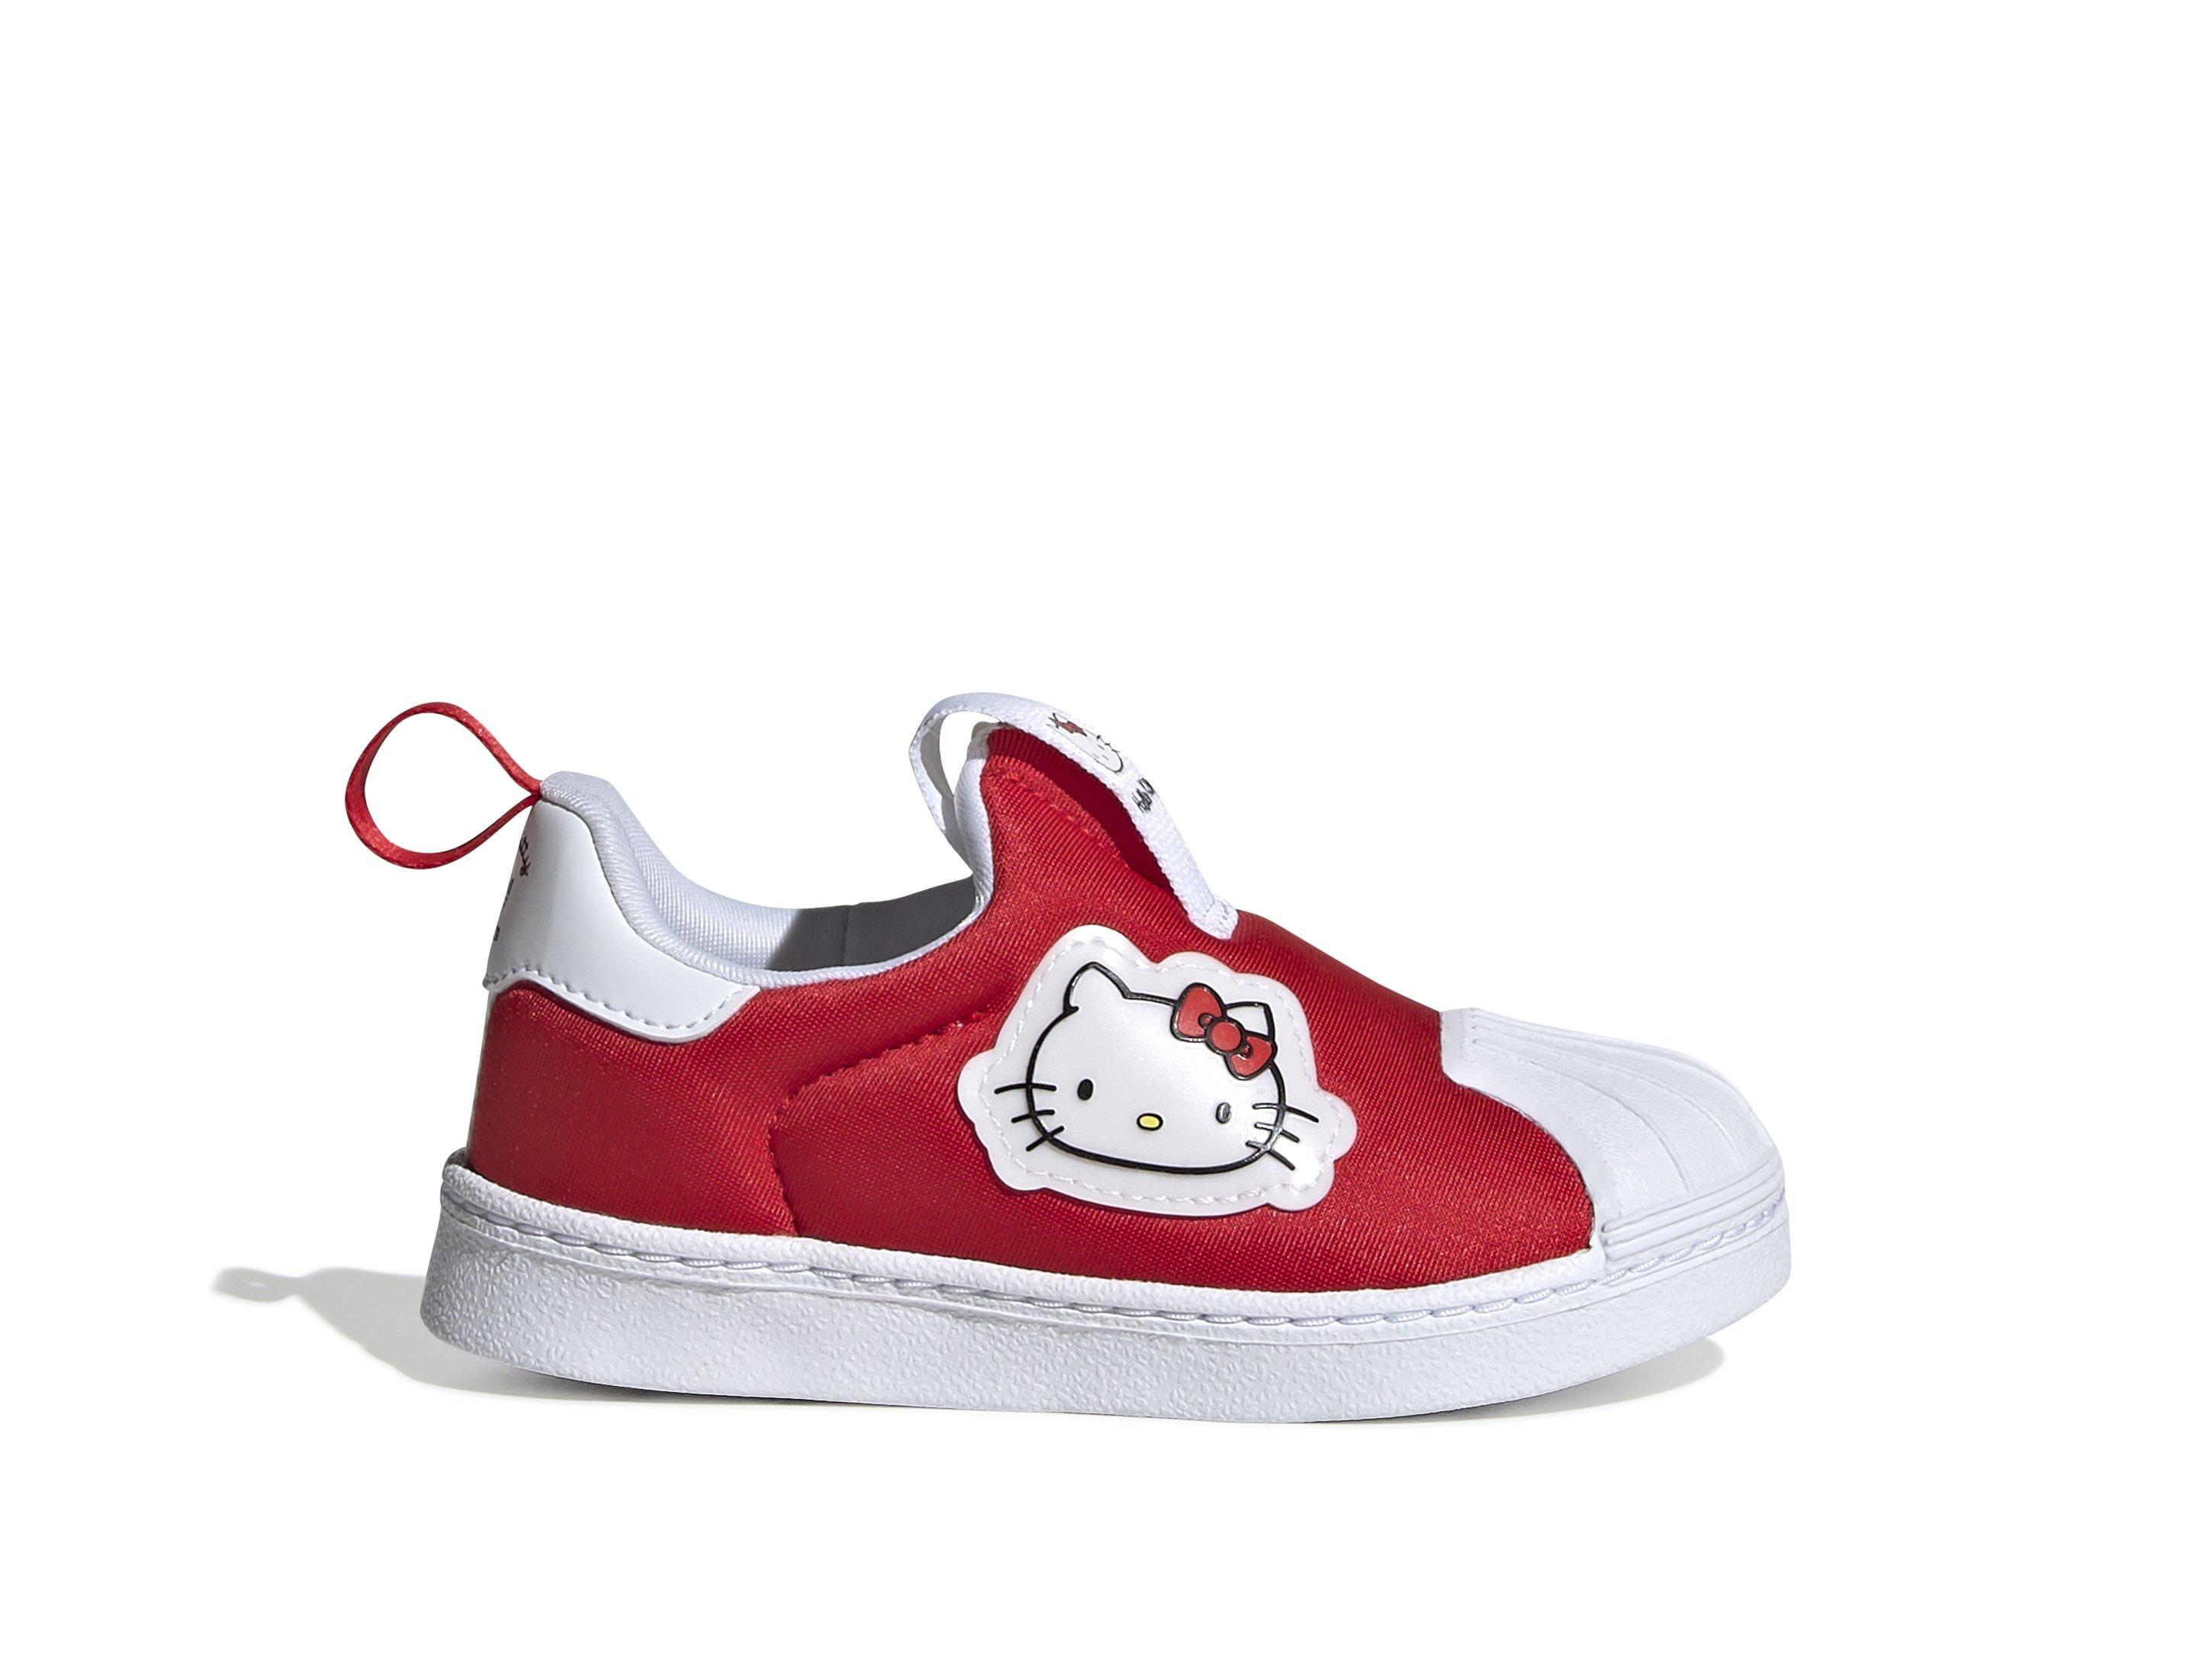 adidas Originals x Hello Kitty Hoodie - Brown